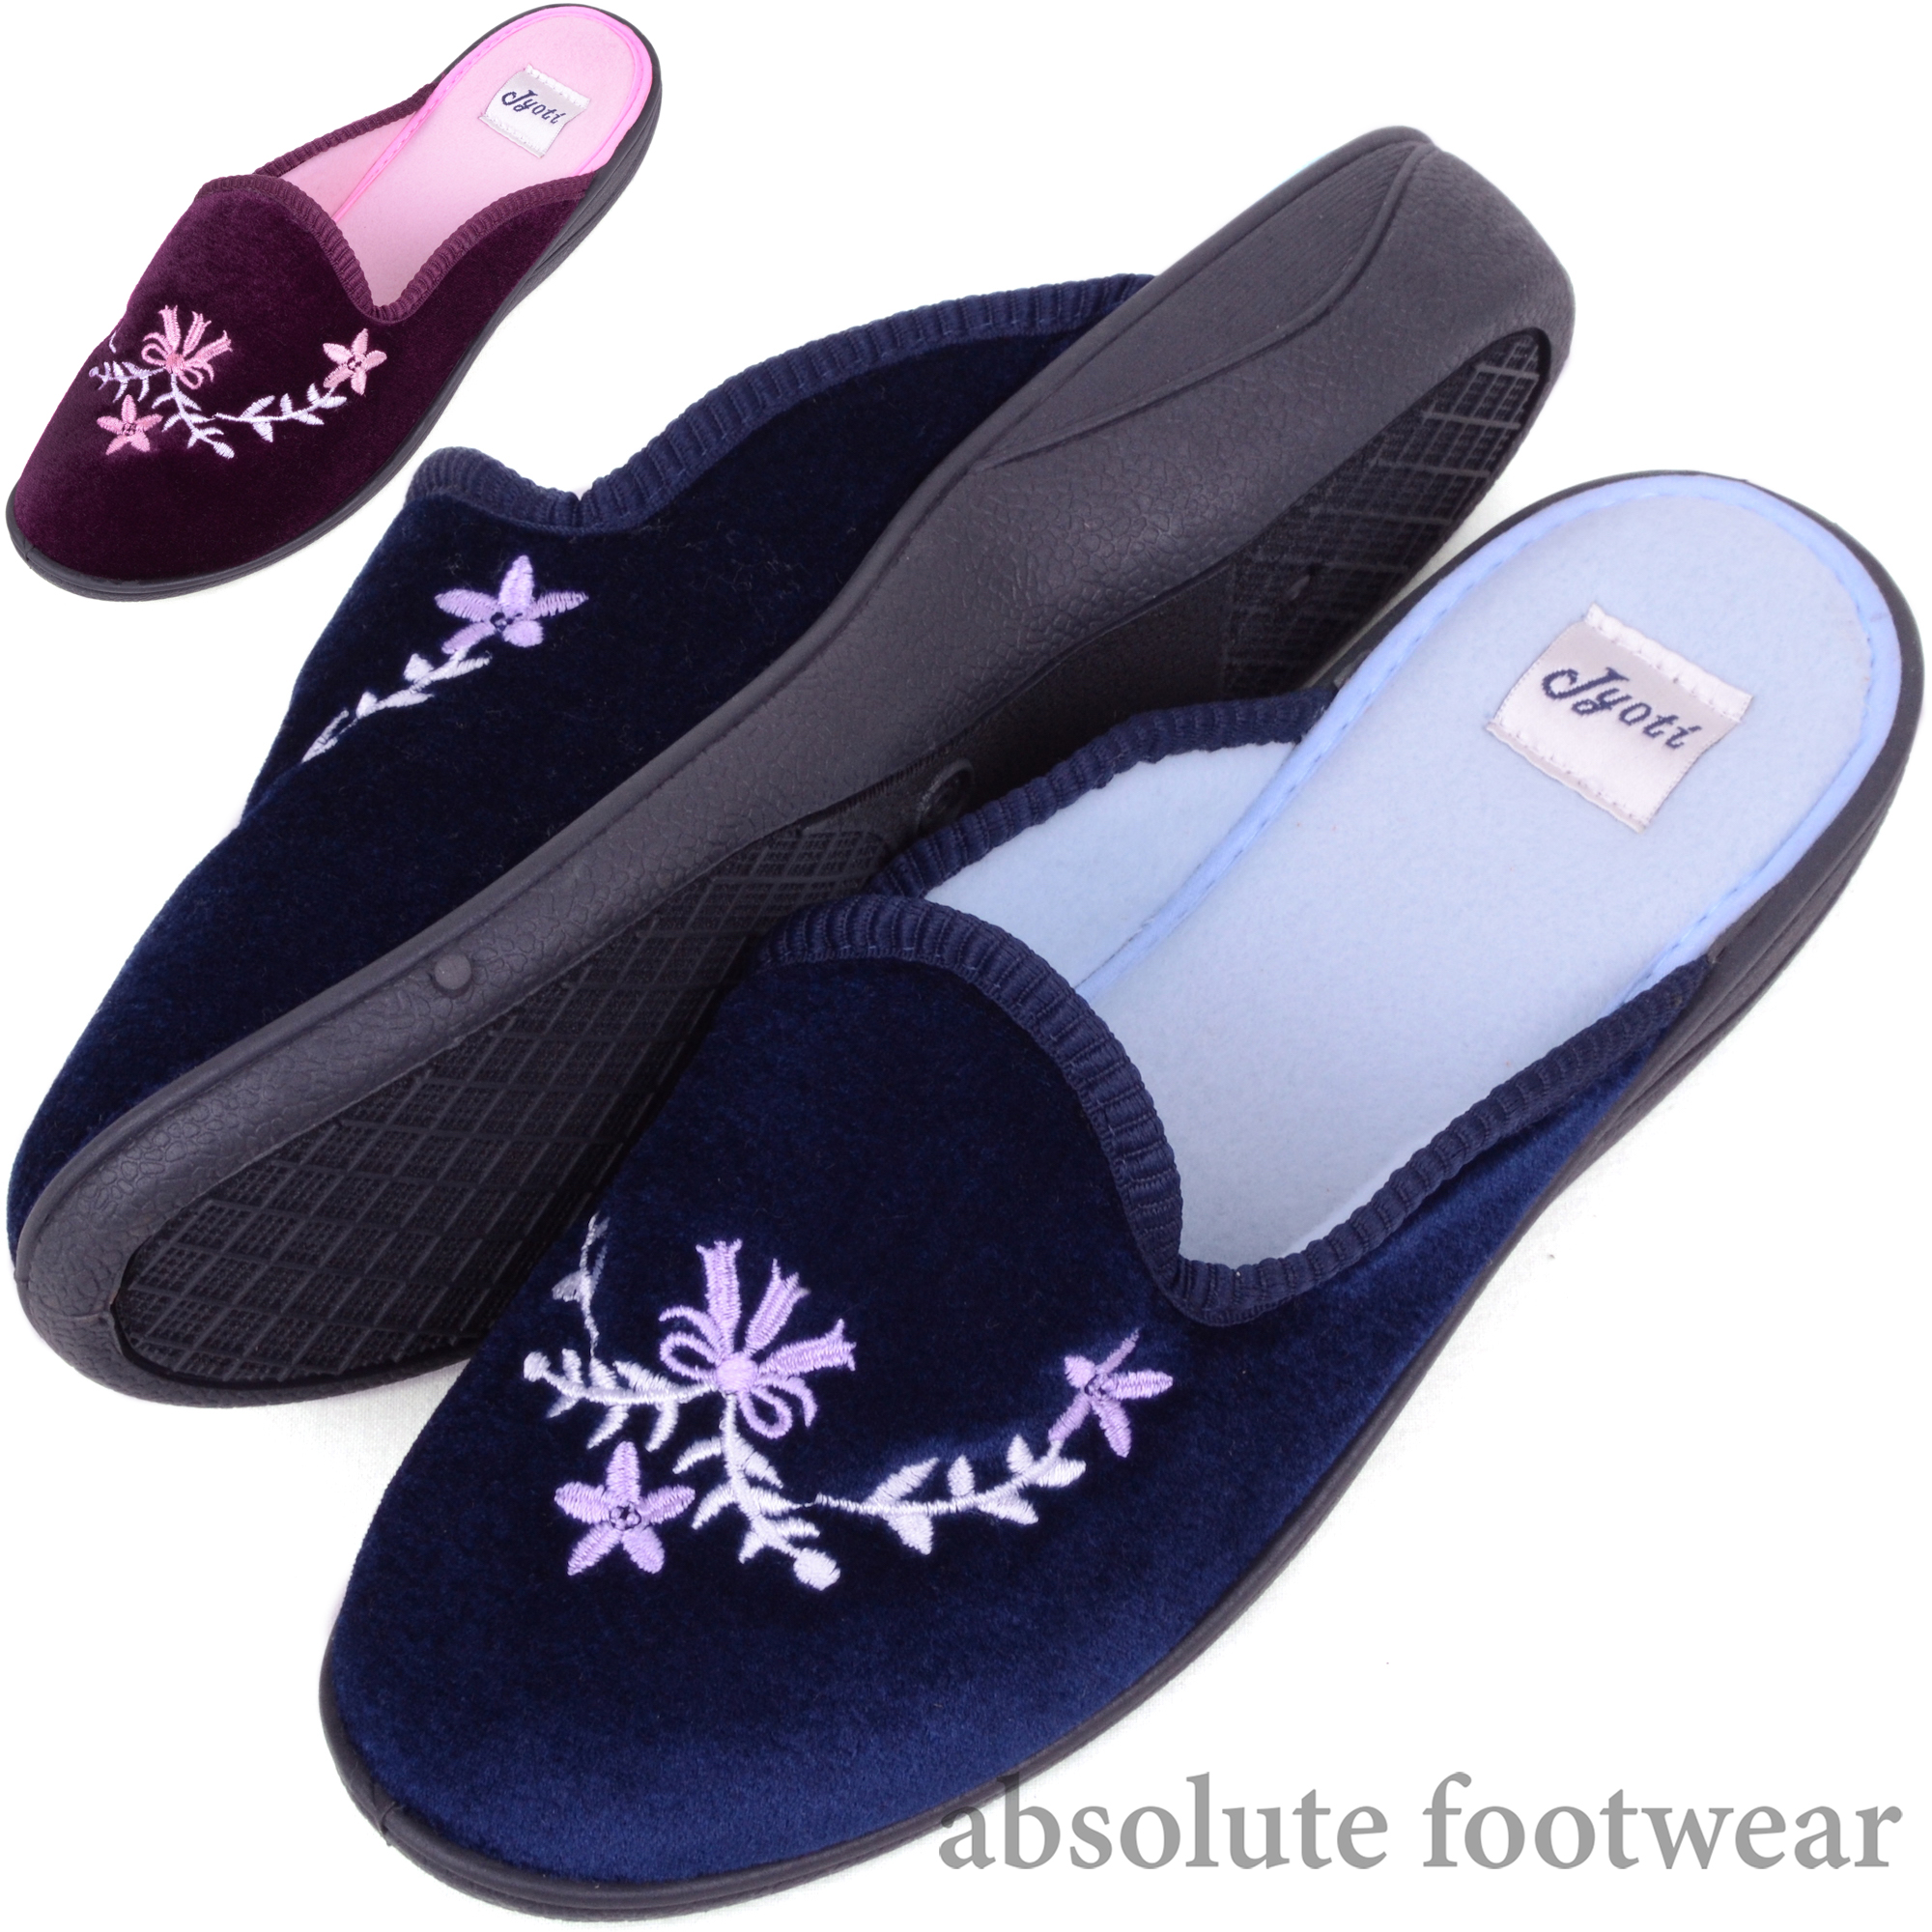 slippers design for ladies